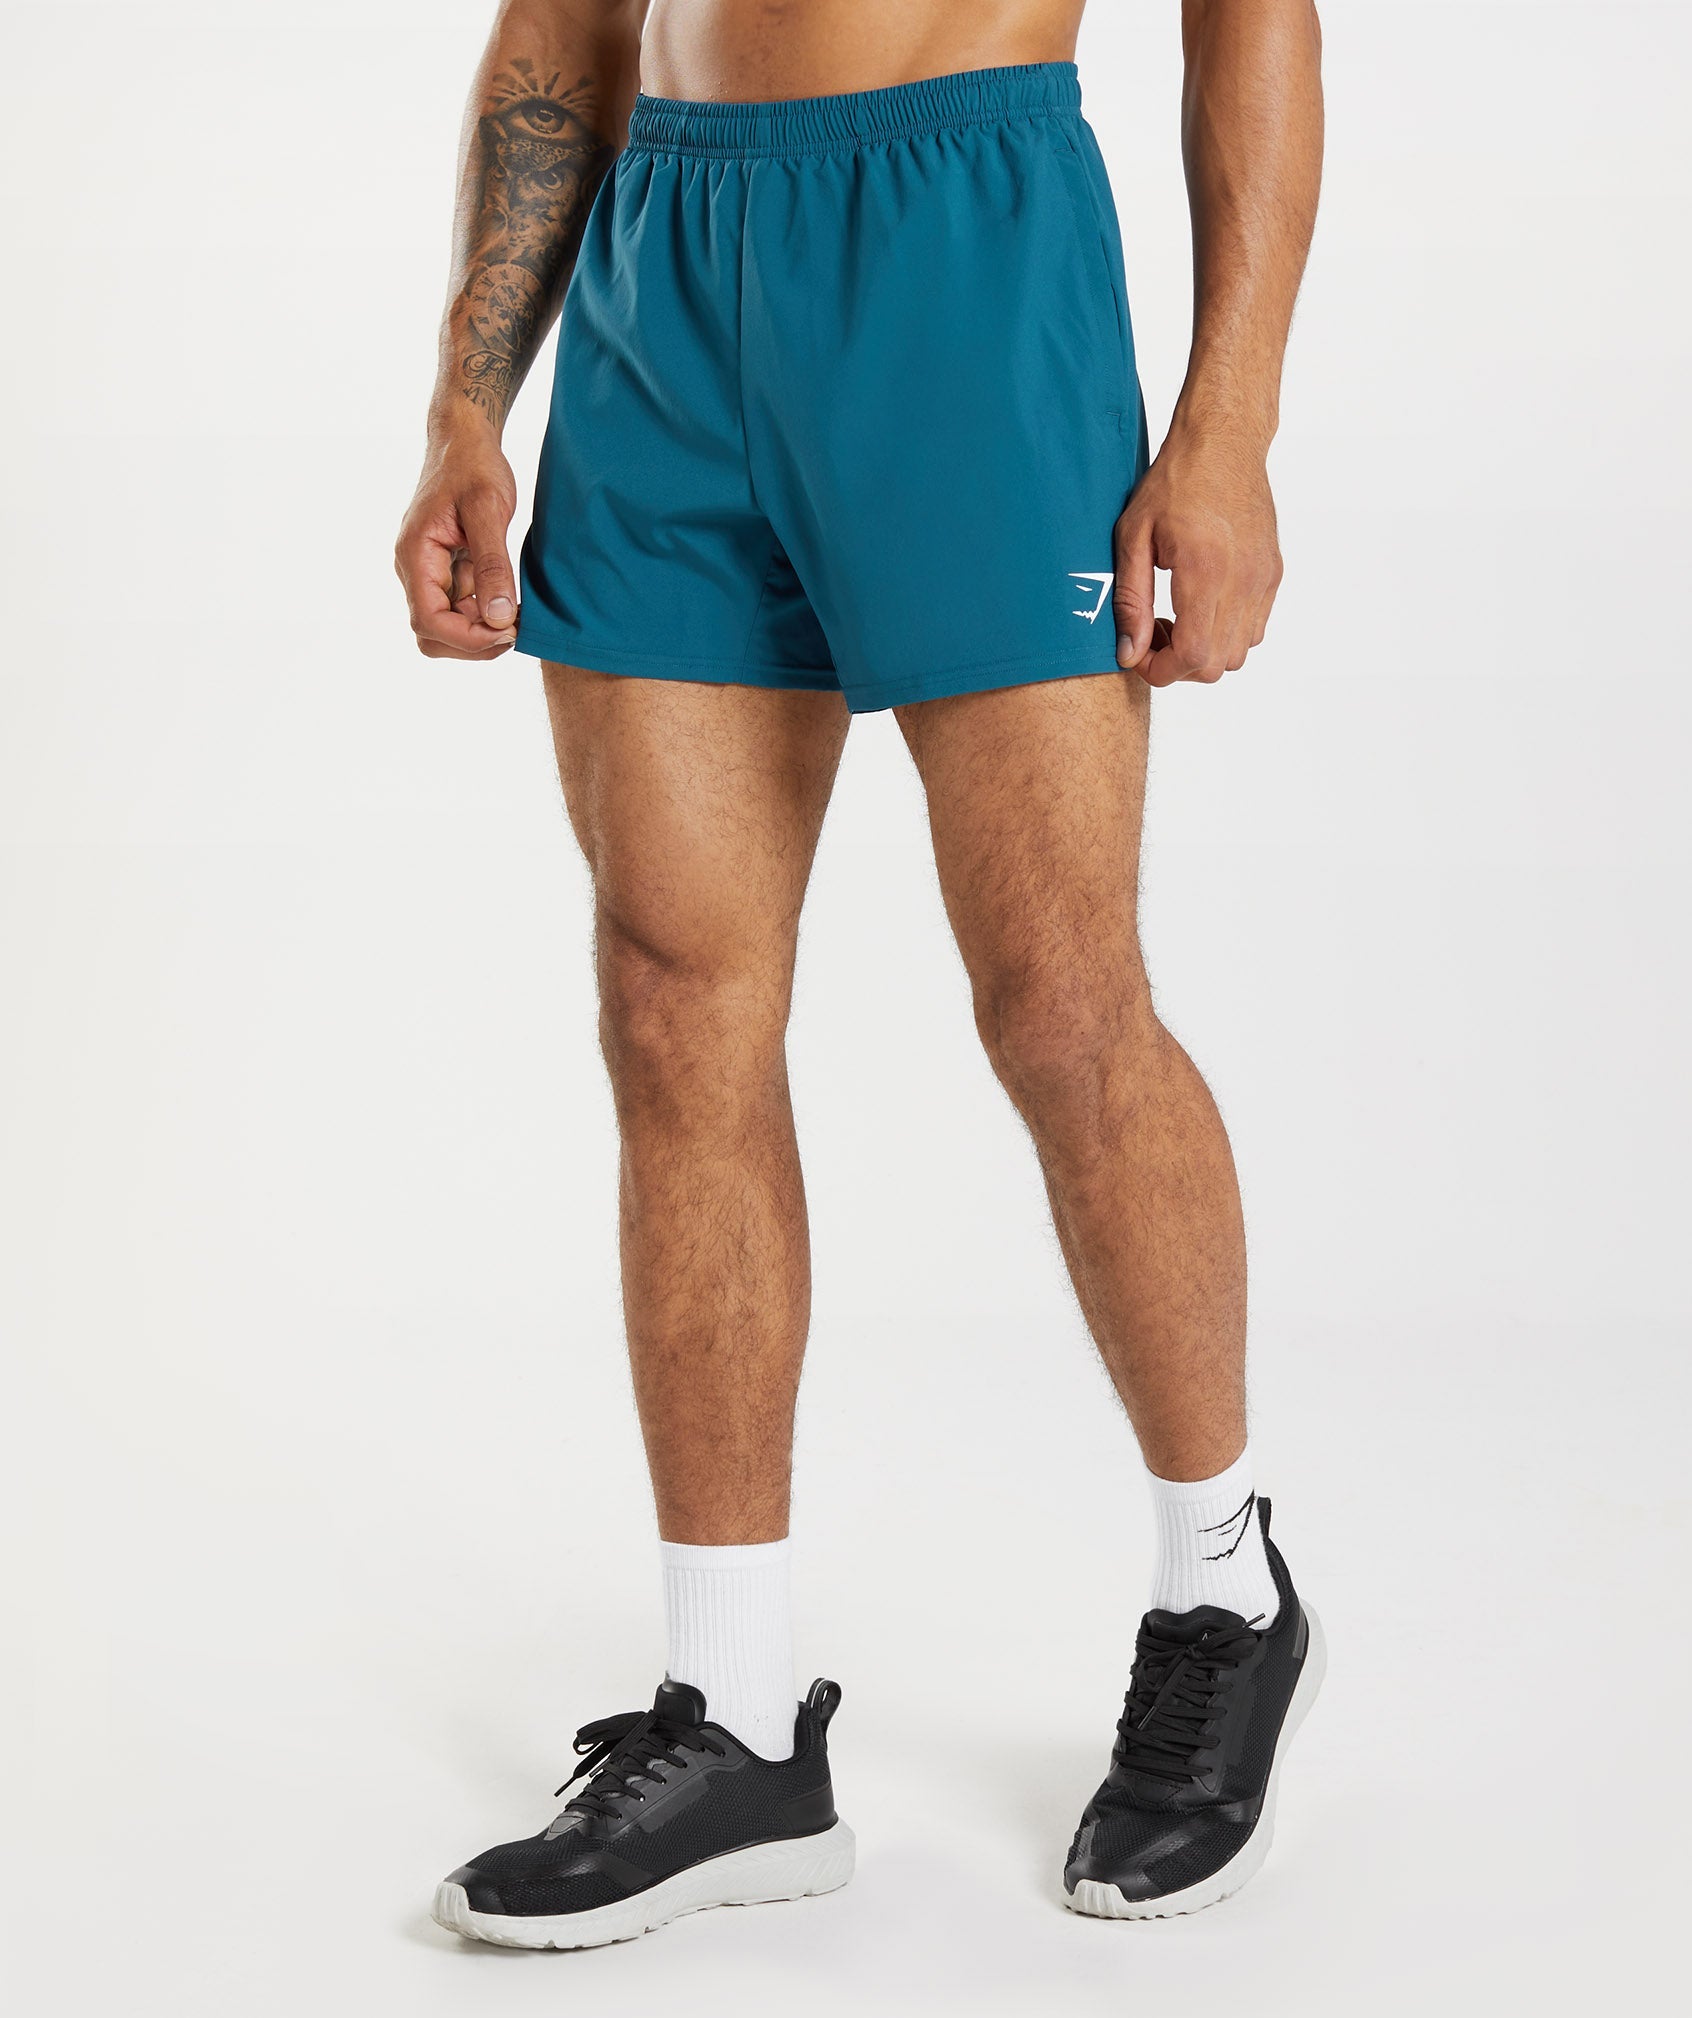 Gymshark Arrival 5 Shorts - Atlantic Blue